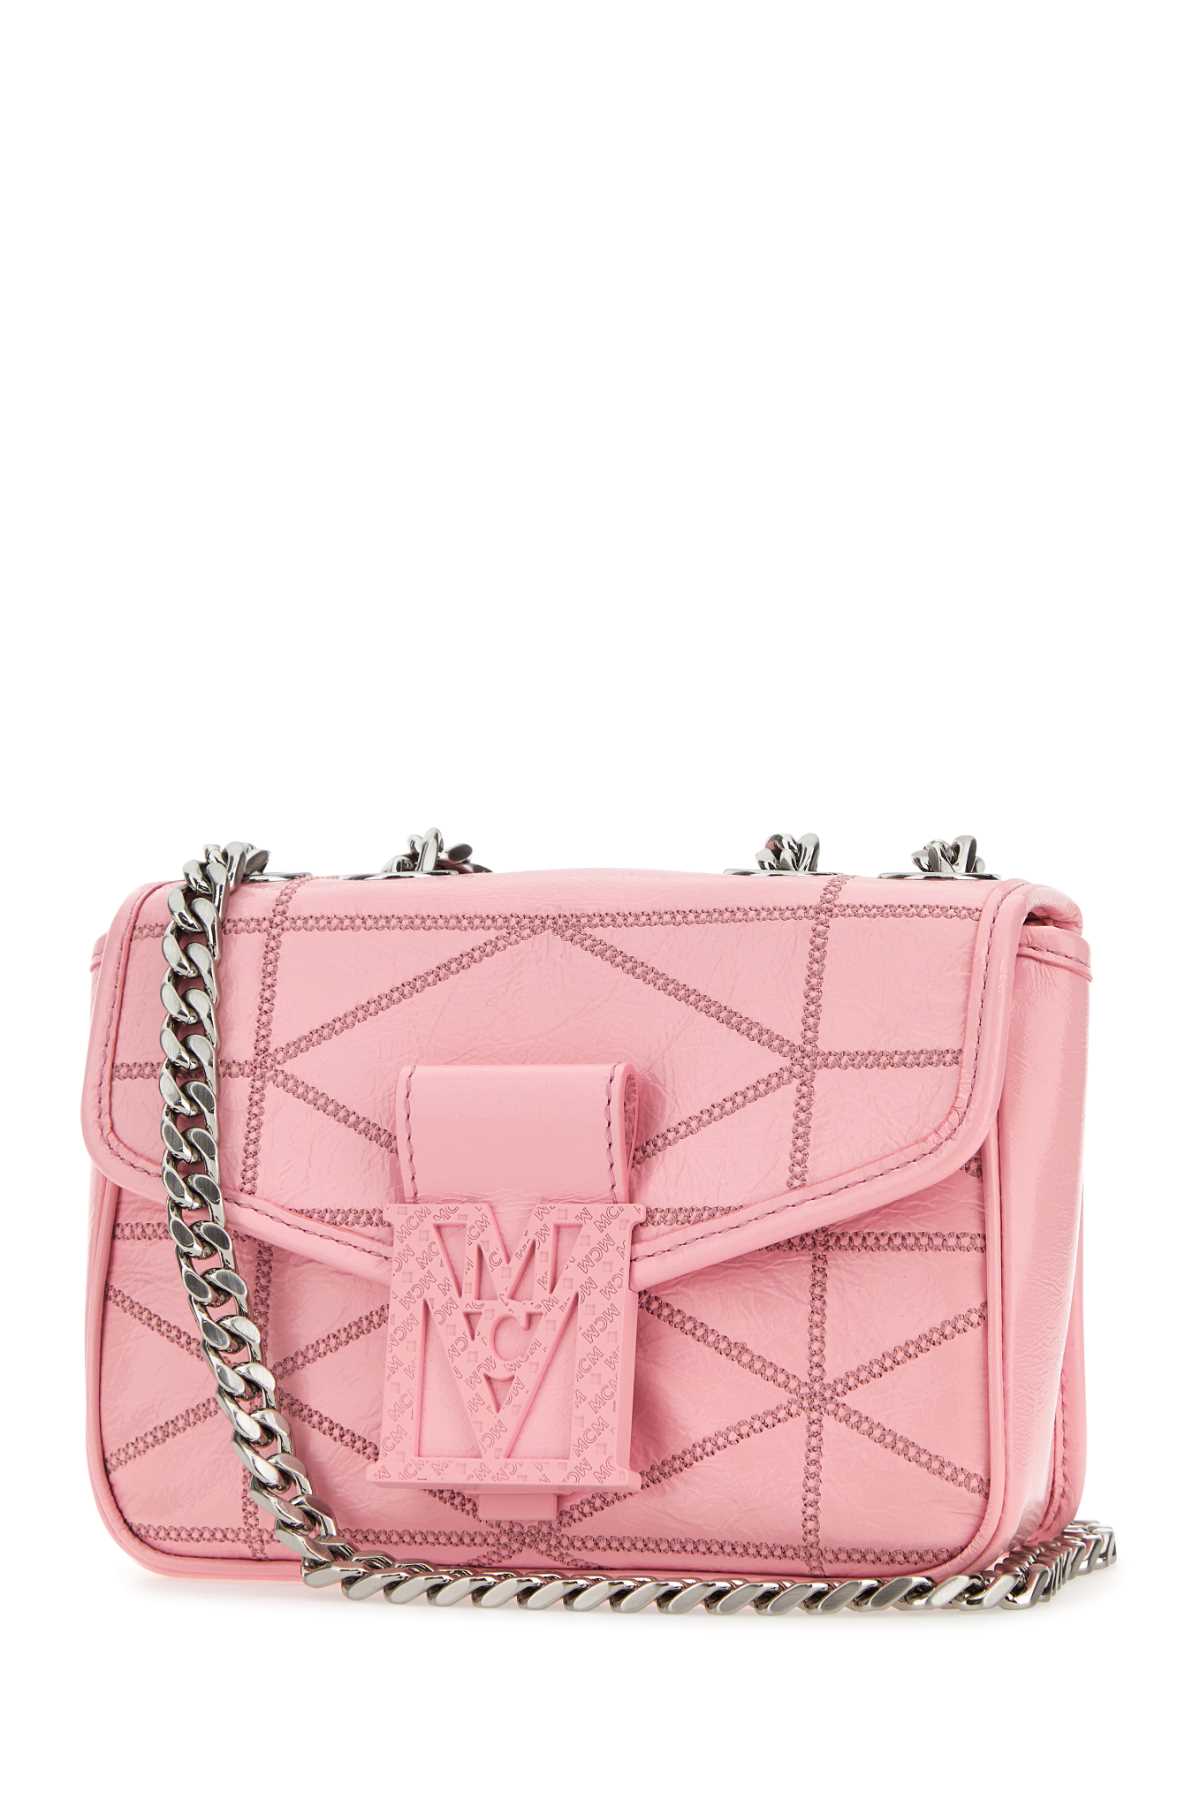 Mcm Pink Leather Mini Travia Shoulder Bag In Qh